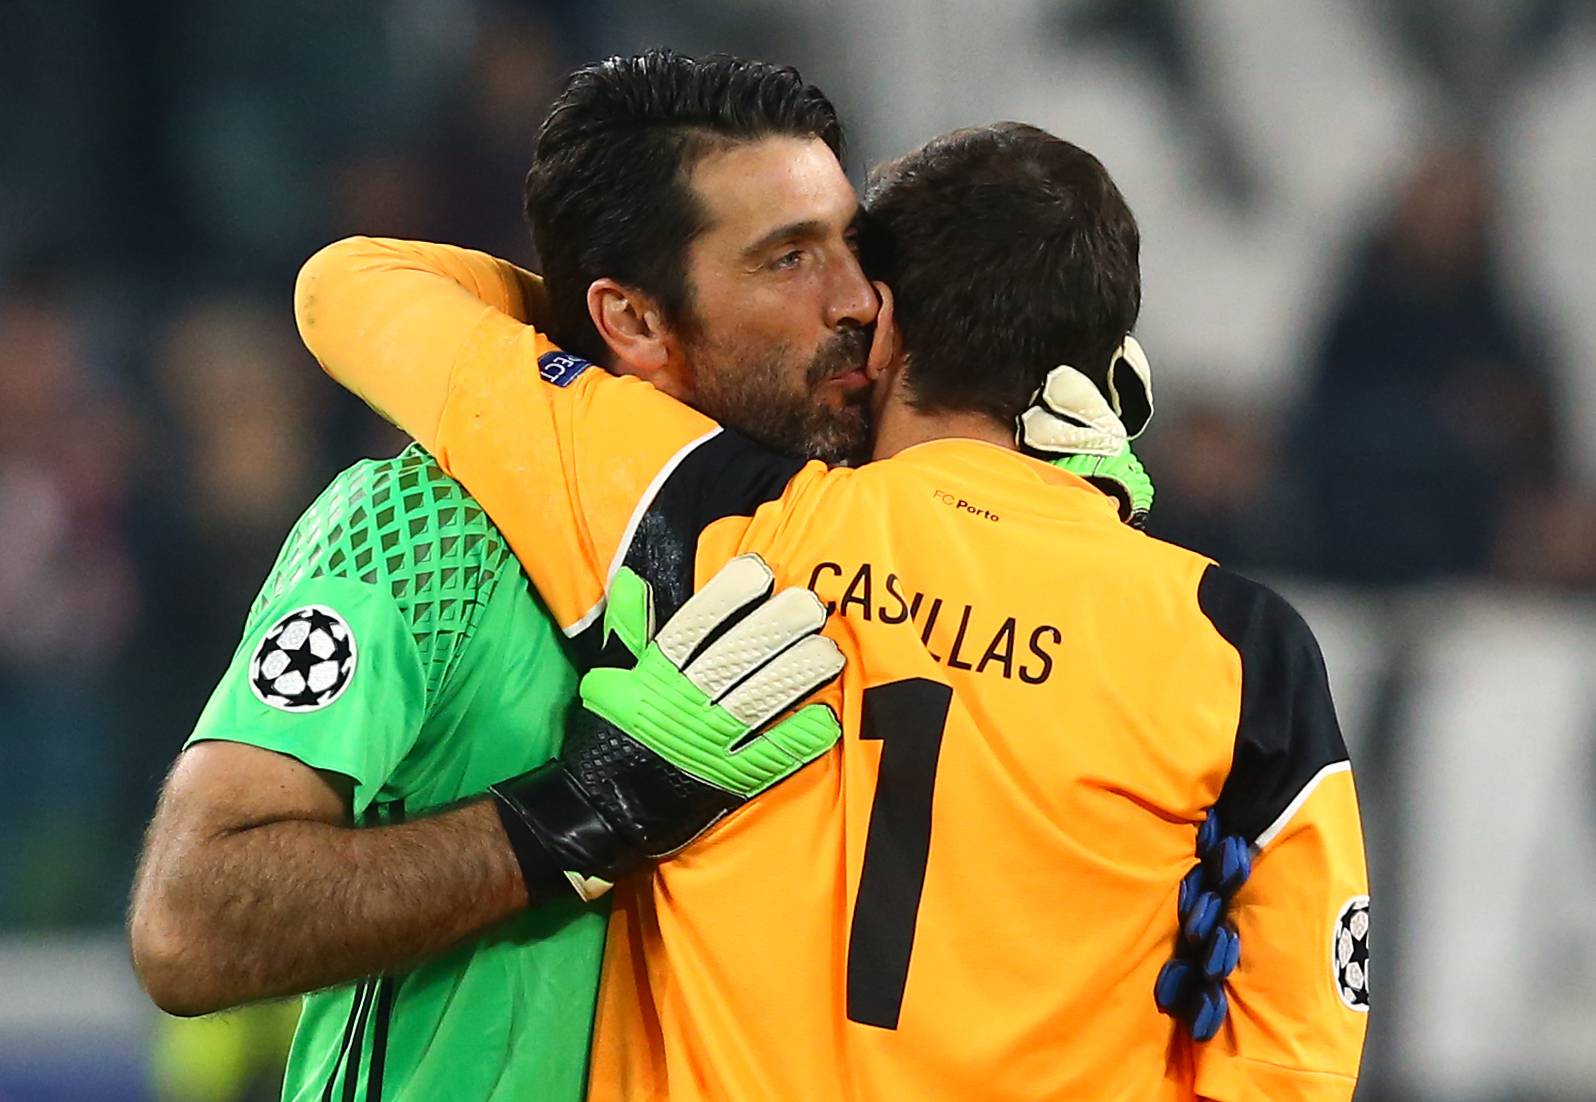 Juventus' Gianluigi Buffon and FC Porto's Iker Casillas after the match